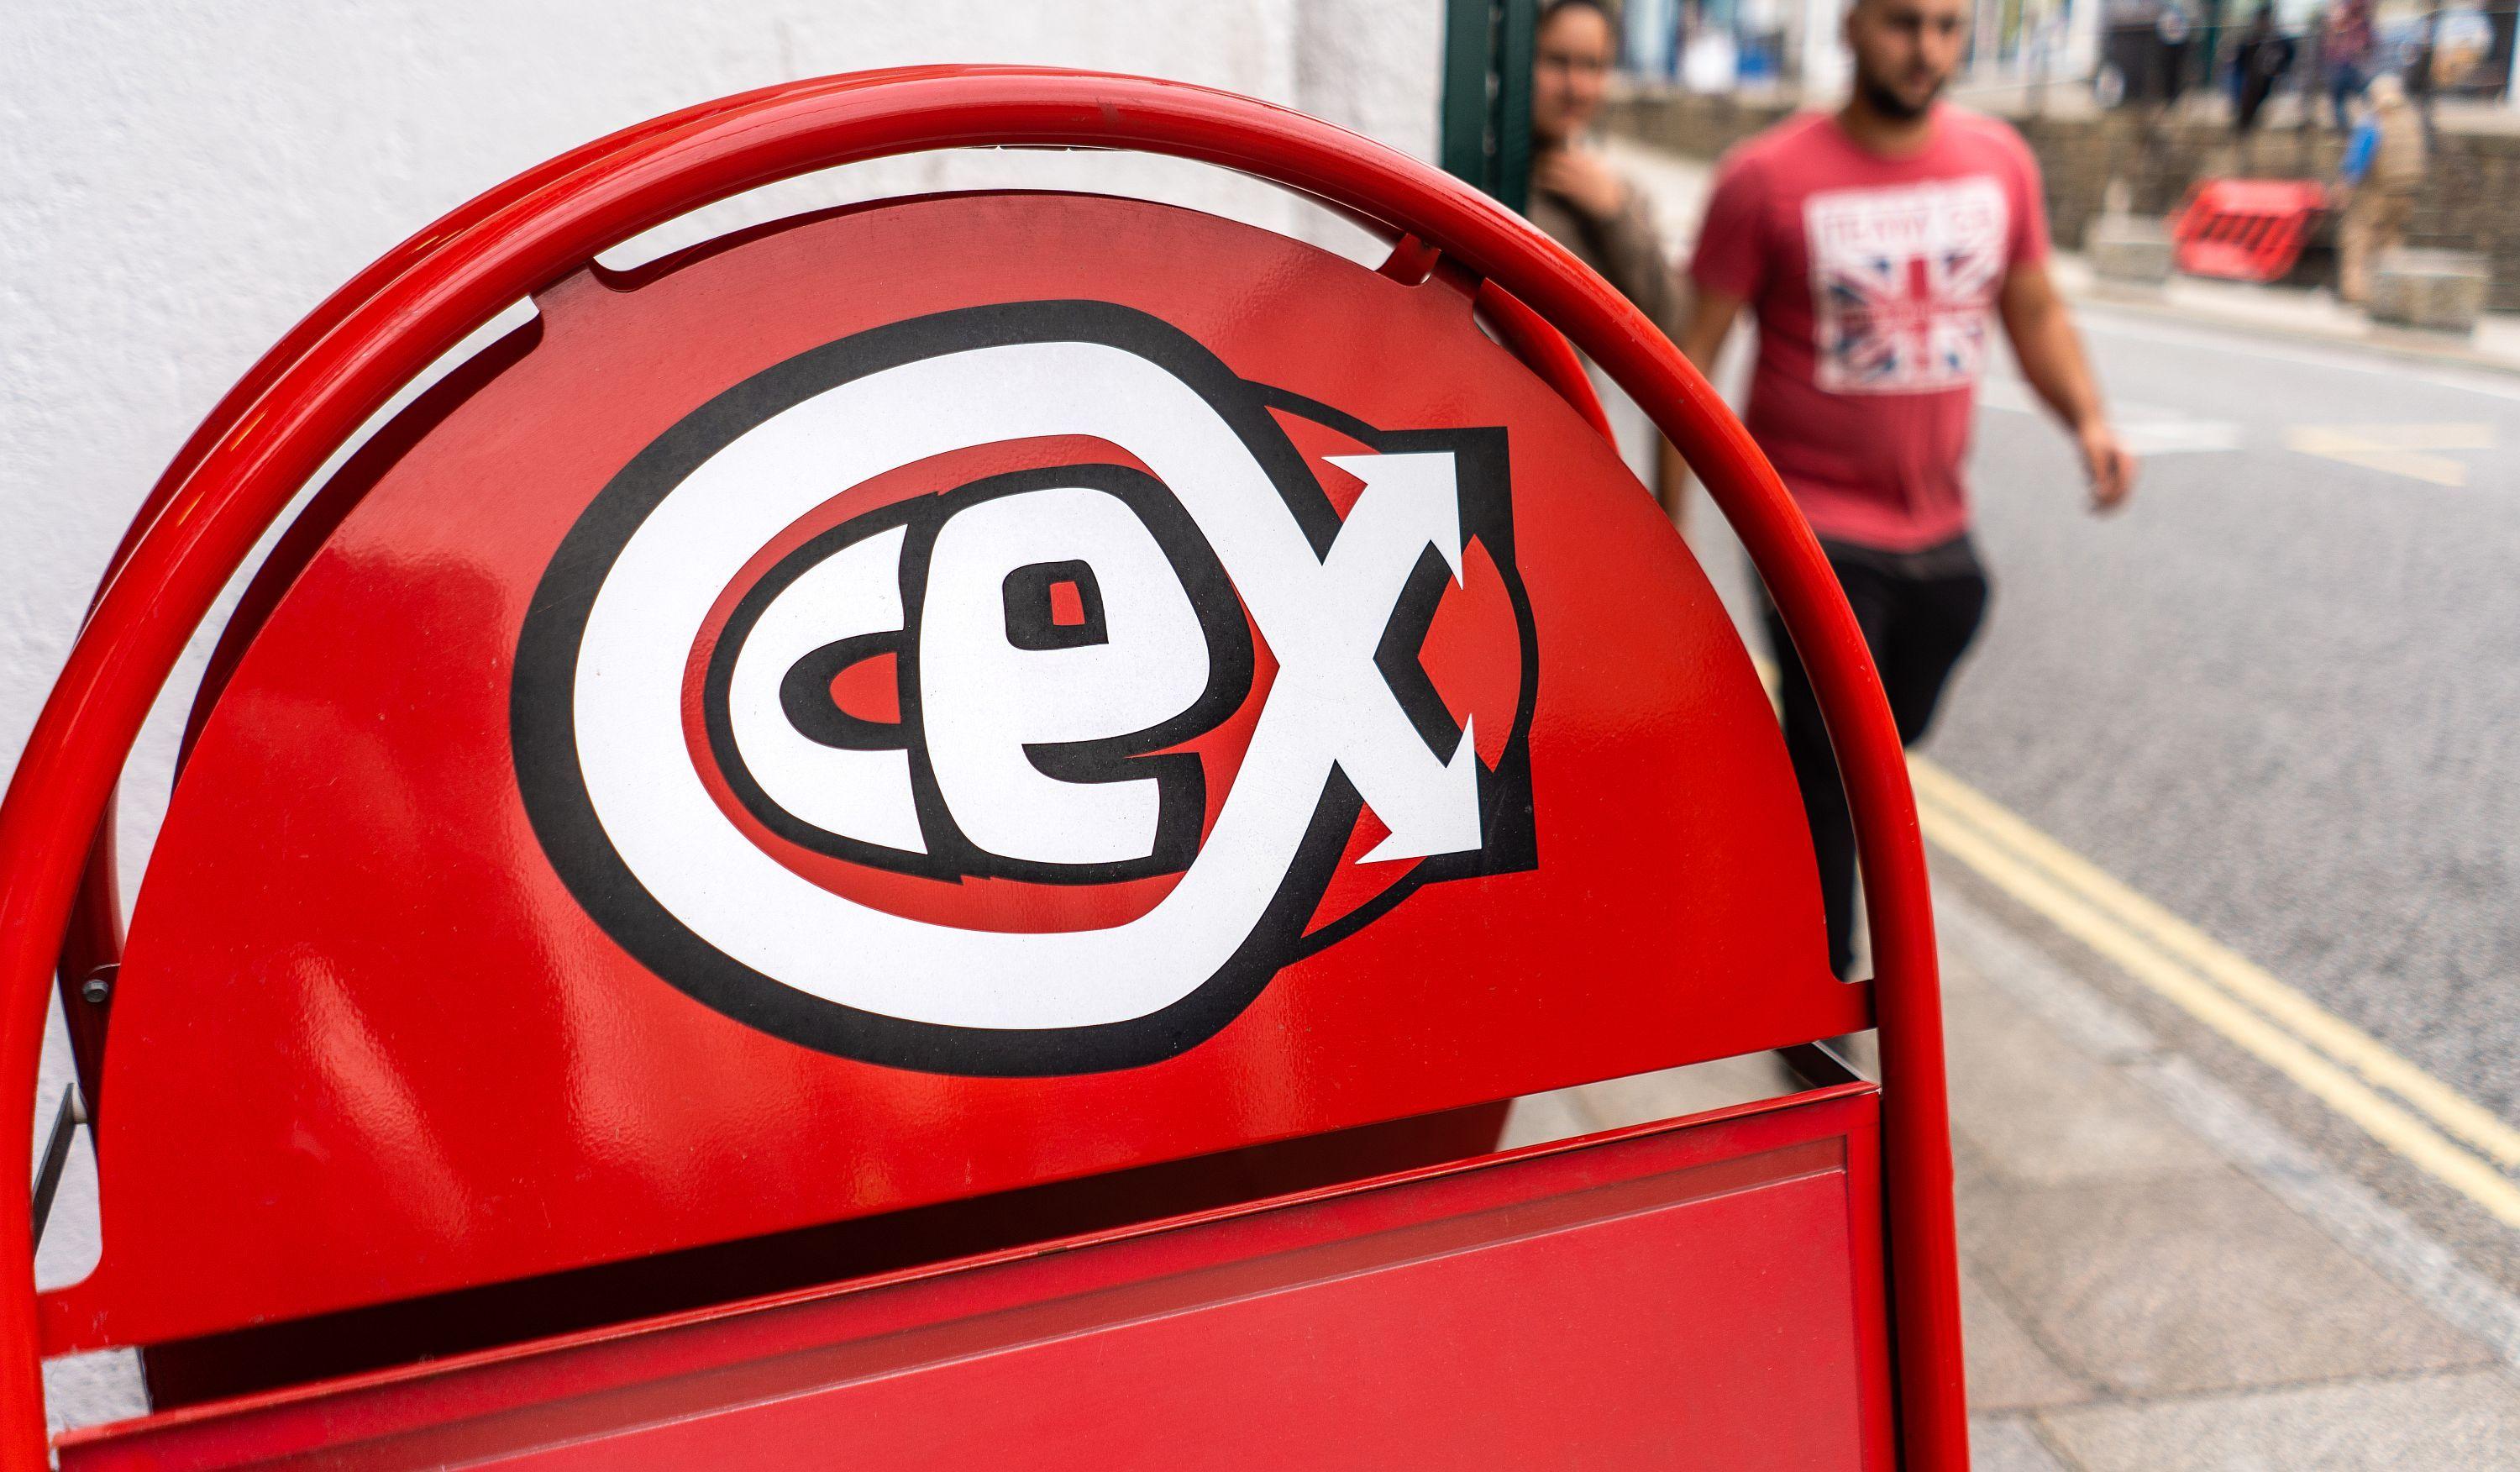 CeX Logo - Start a CeX Franchise